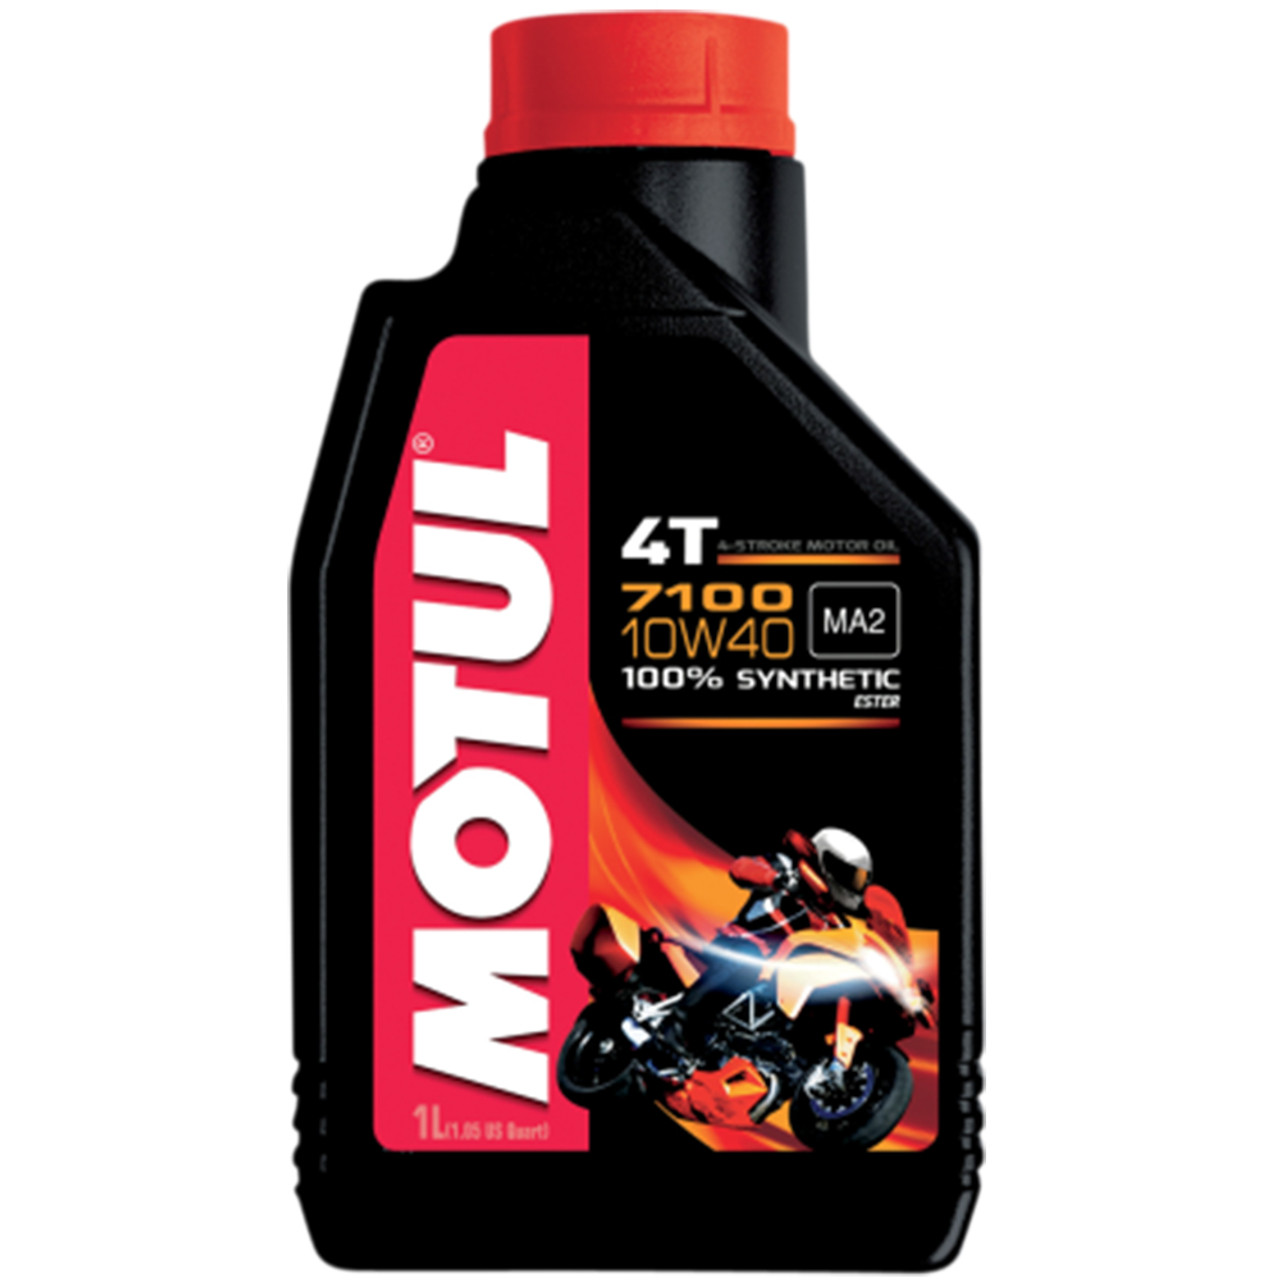 Best Engine Oil For Bikes, Motul 7100 Fully Synthetic 10W40